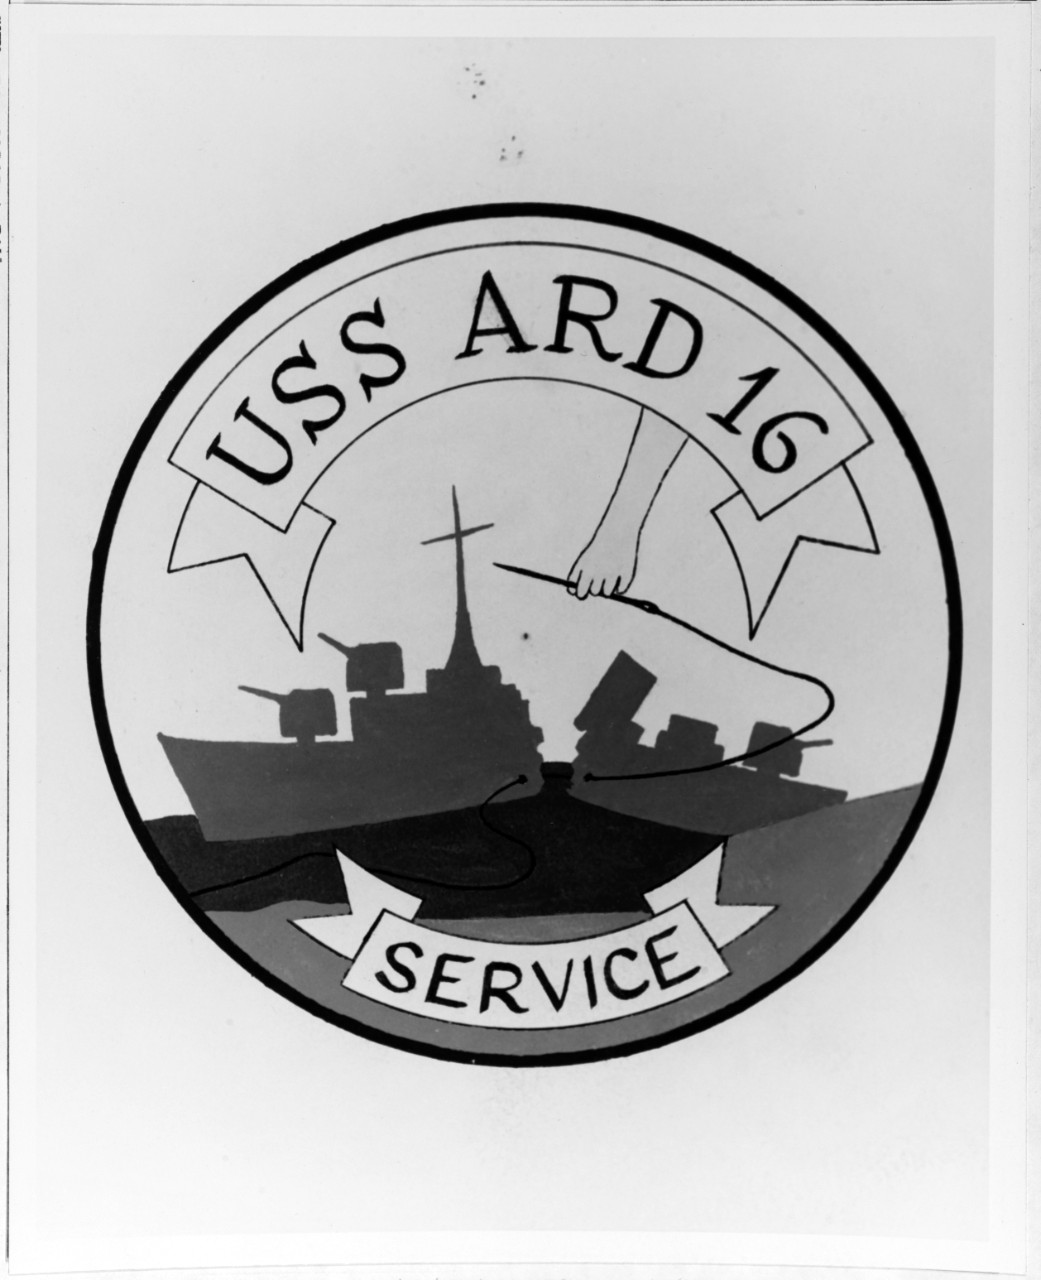 Insignia: USS ARD-16